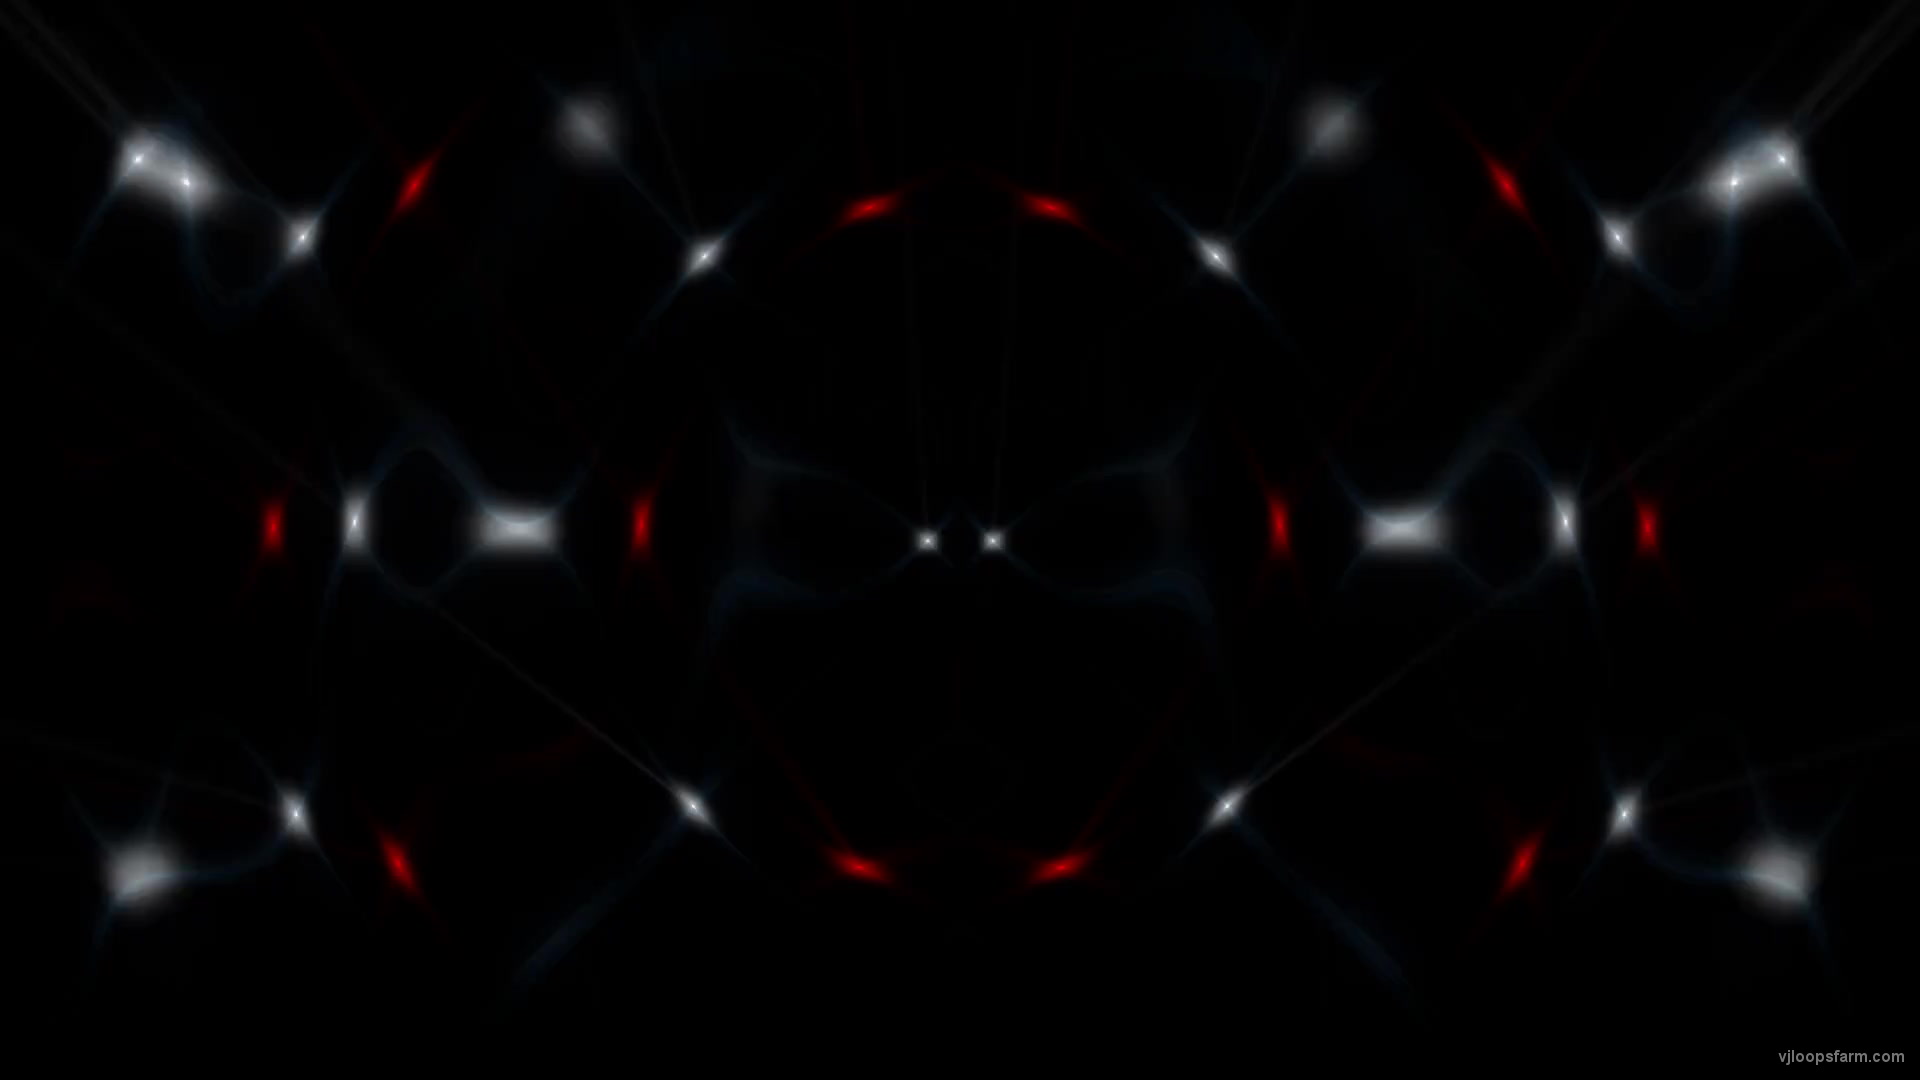 Matrix Flower Red-Blue Video Art blinking stage VJ Loop